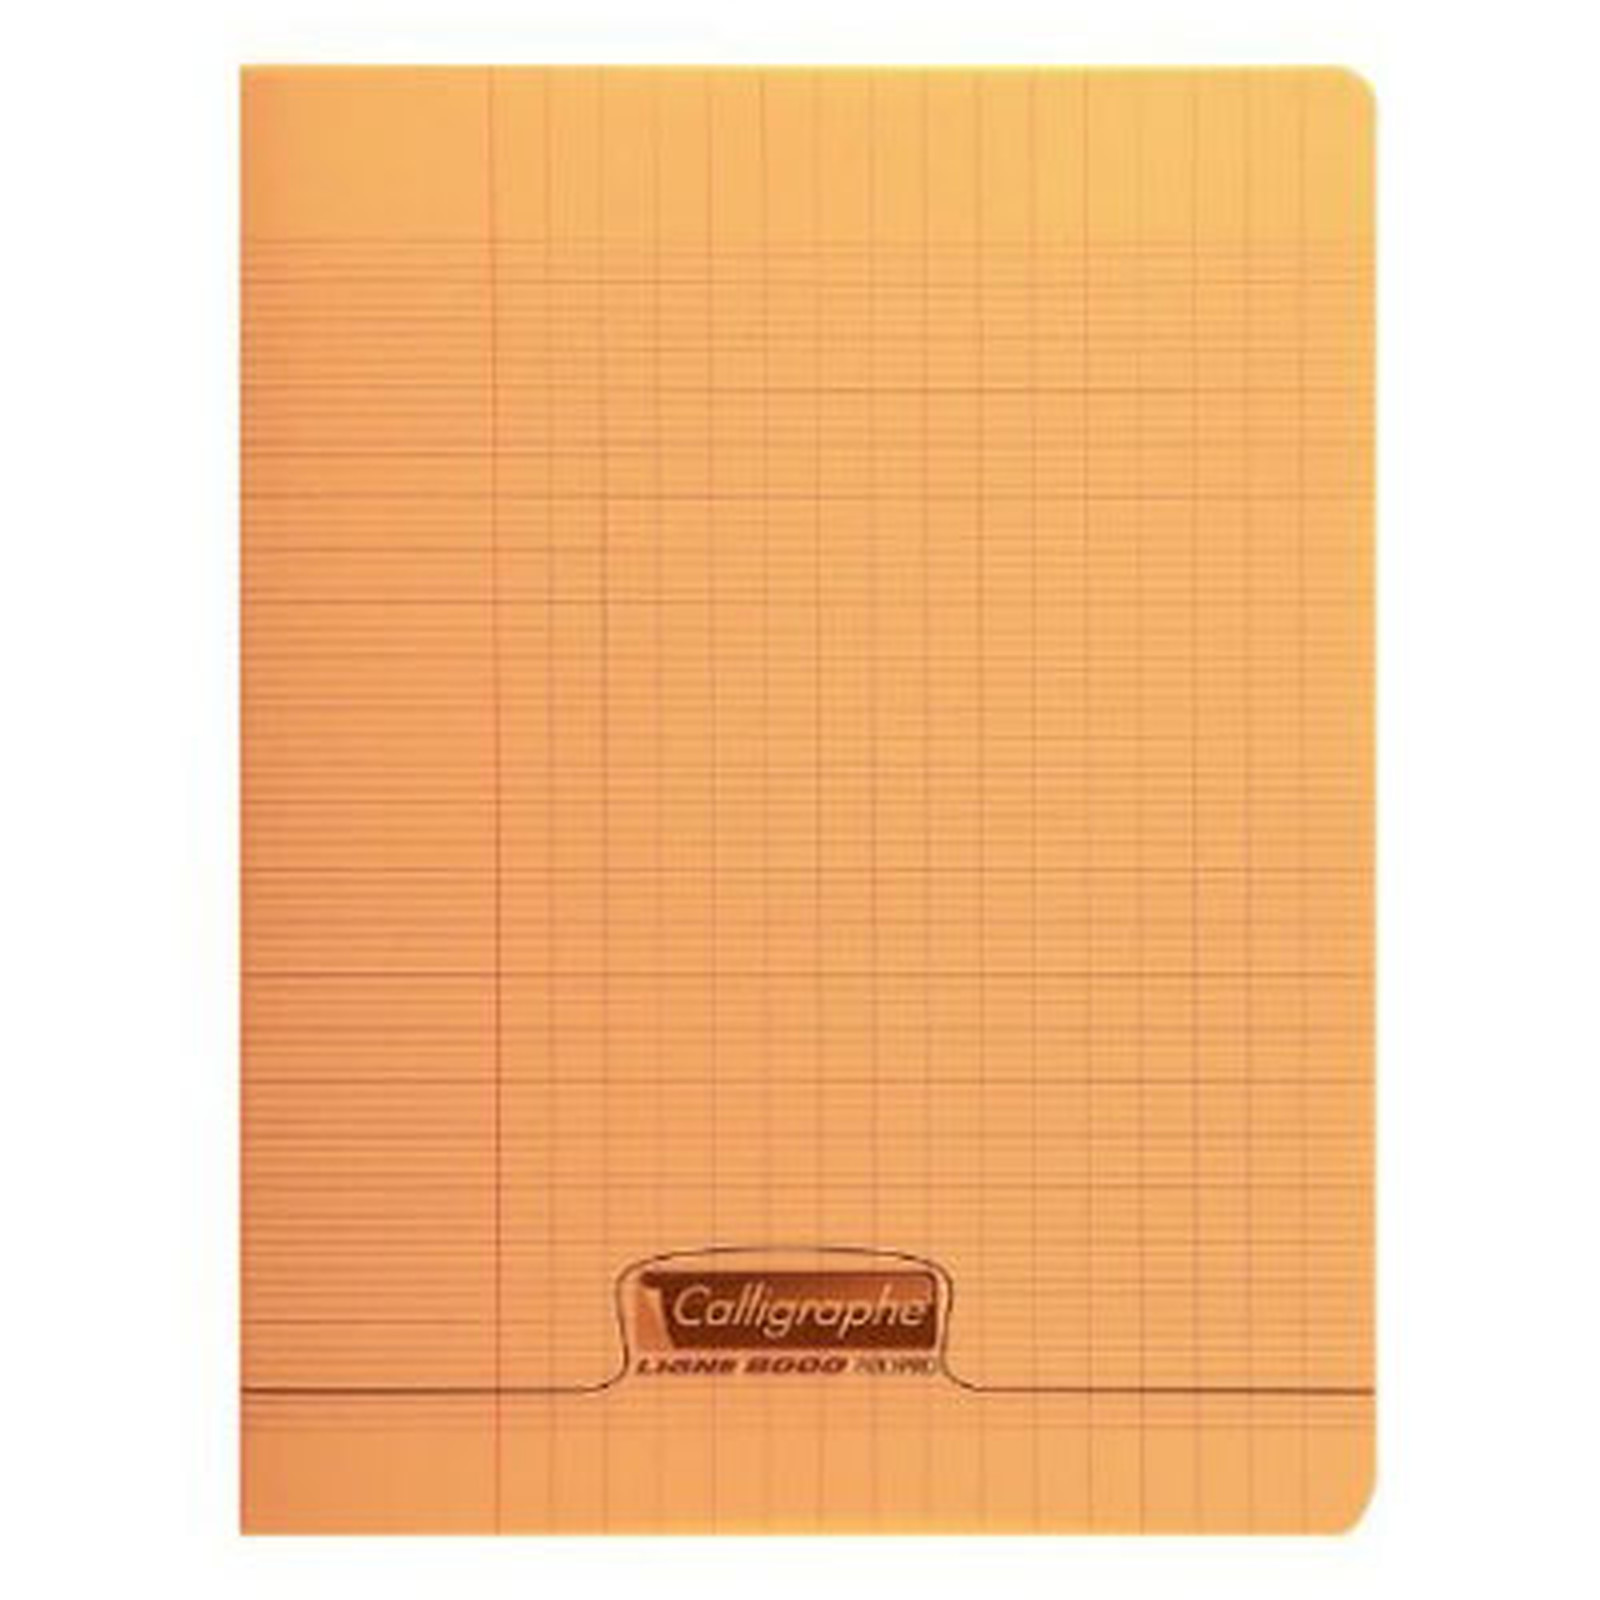 Calligraphe 8000 Polypro Cahier 96 pages 17 x 22 cm seyes grands carreaux Orange - Cahier Calligraphe